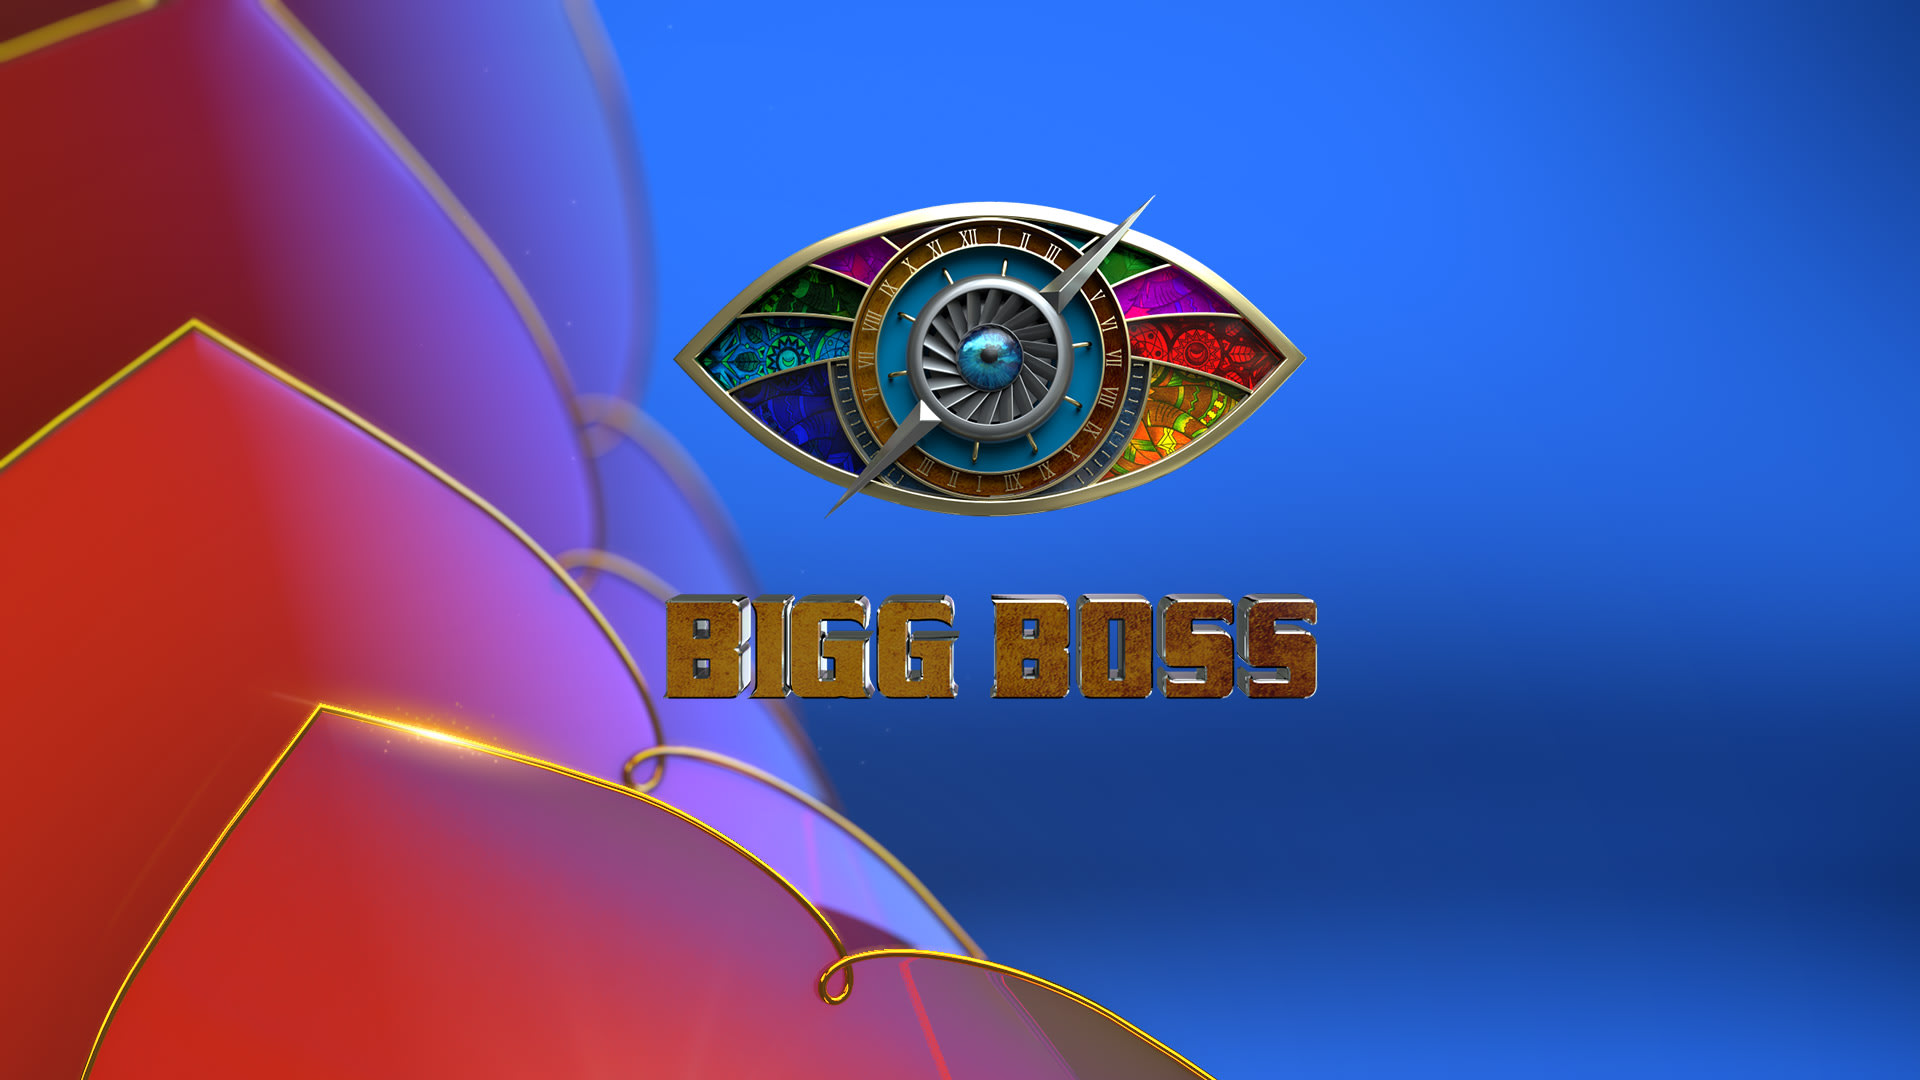 Bigg boss tamil season 5 live